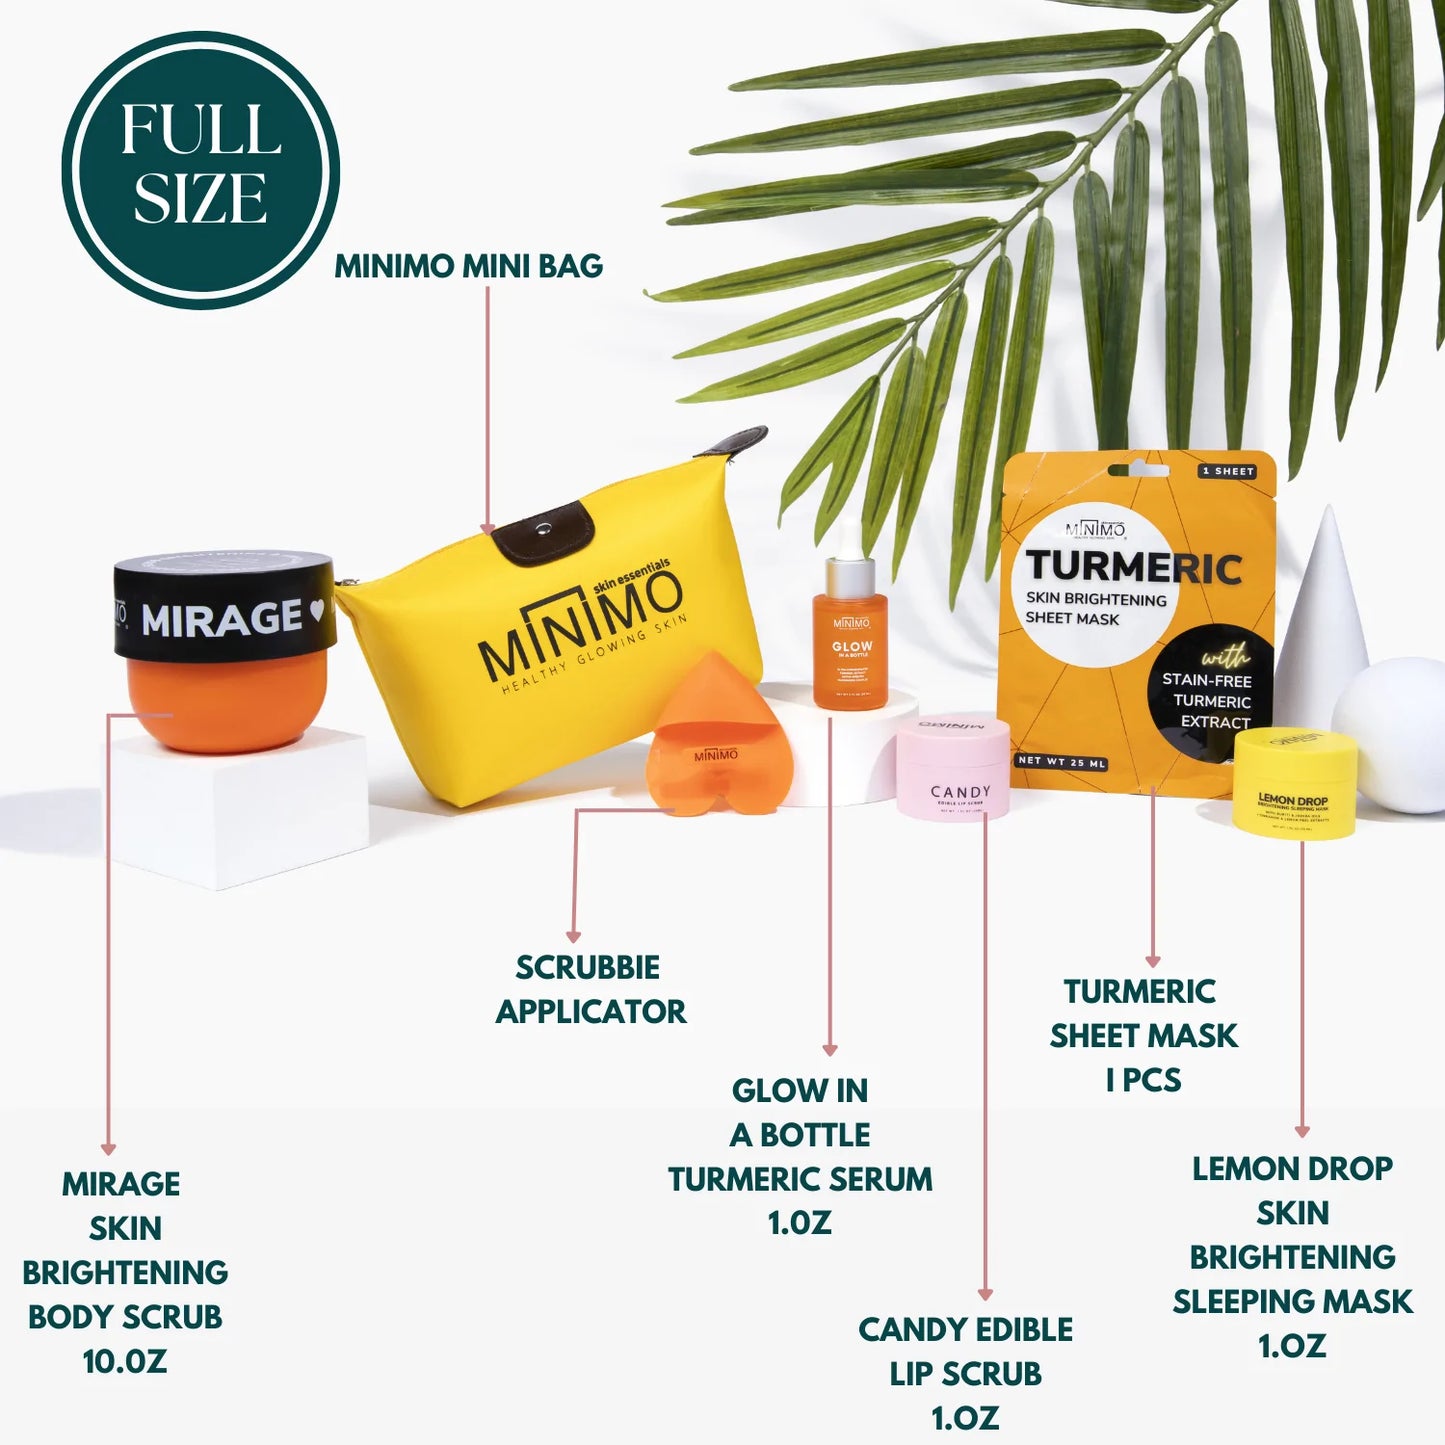 Head to Toe  Glow Bundle Gift Set - Minimo Skin Essentials